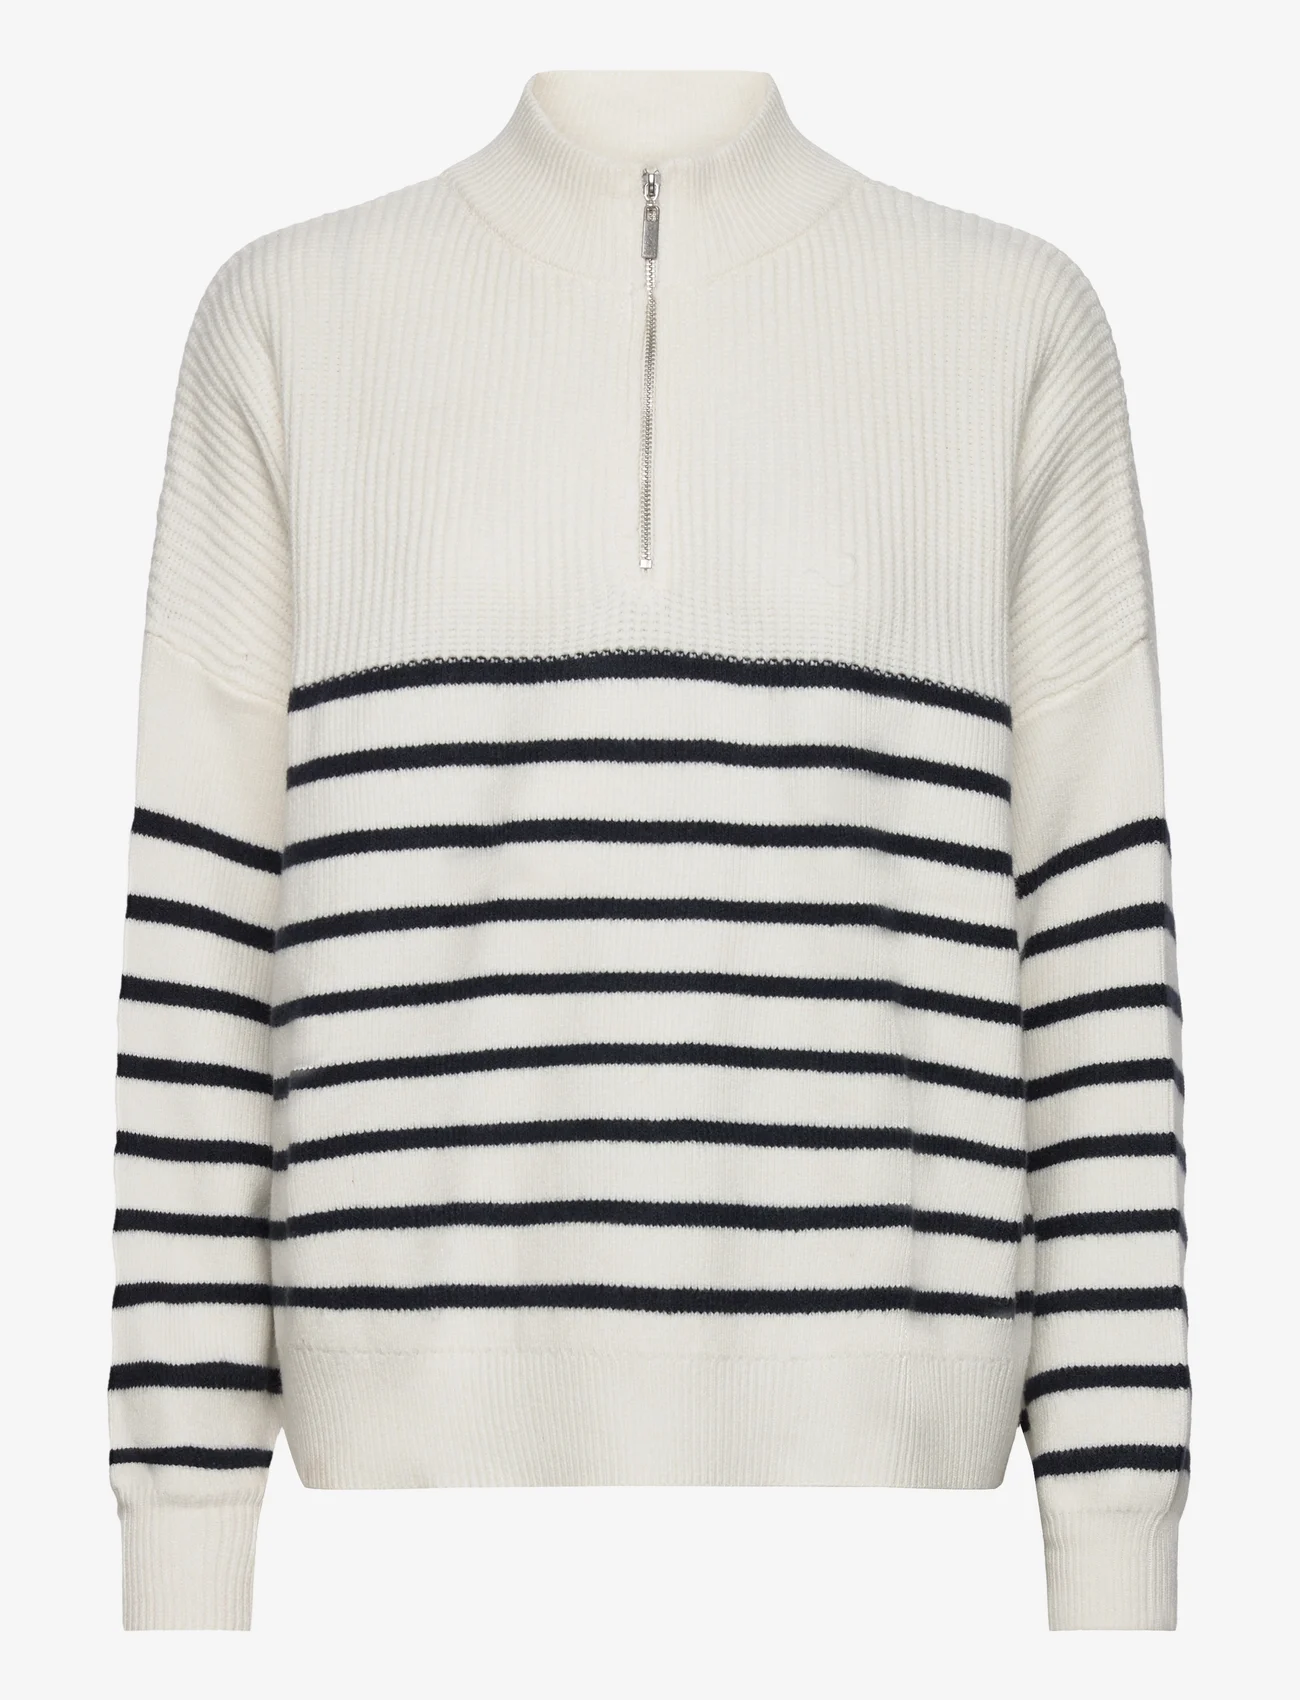 Mango - Striped sweater with zip - tröjor - navy - 0